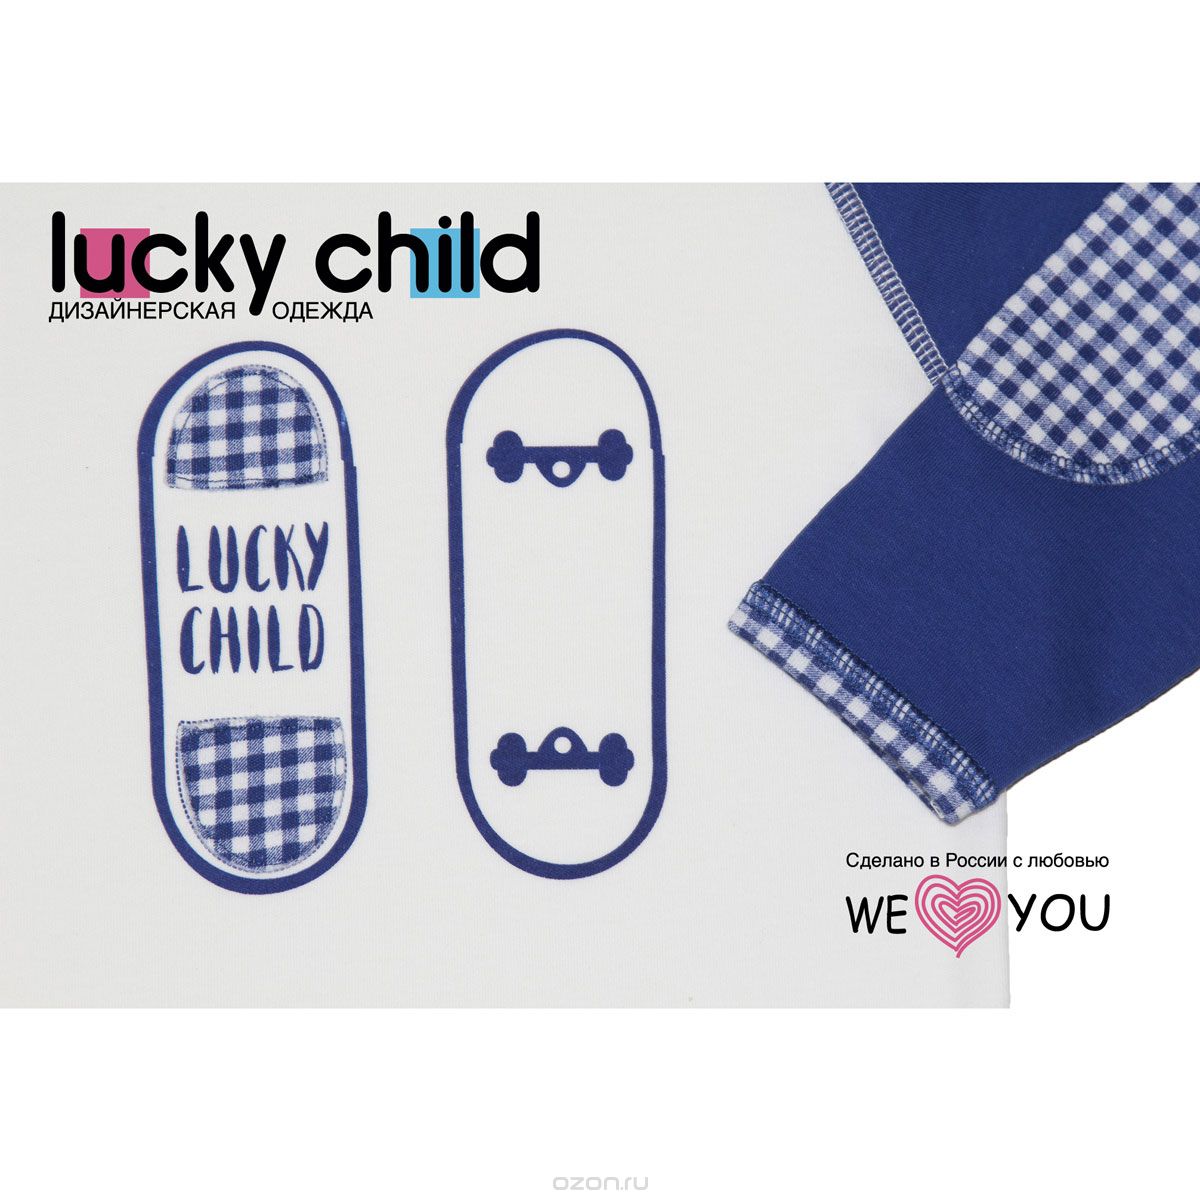    Lucky Child: , , : , . 13-411.  128/134